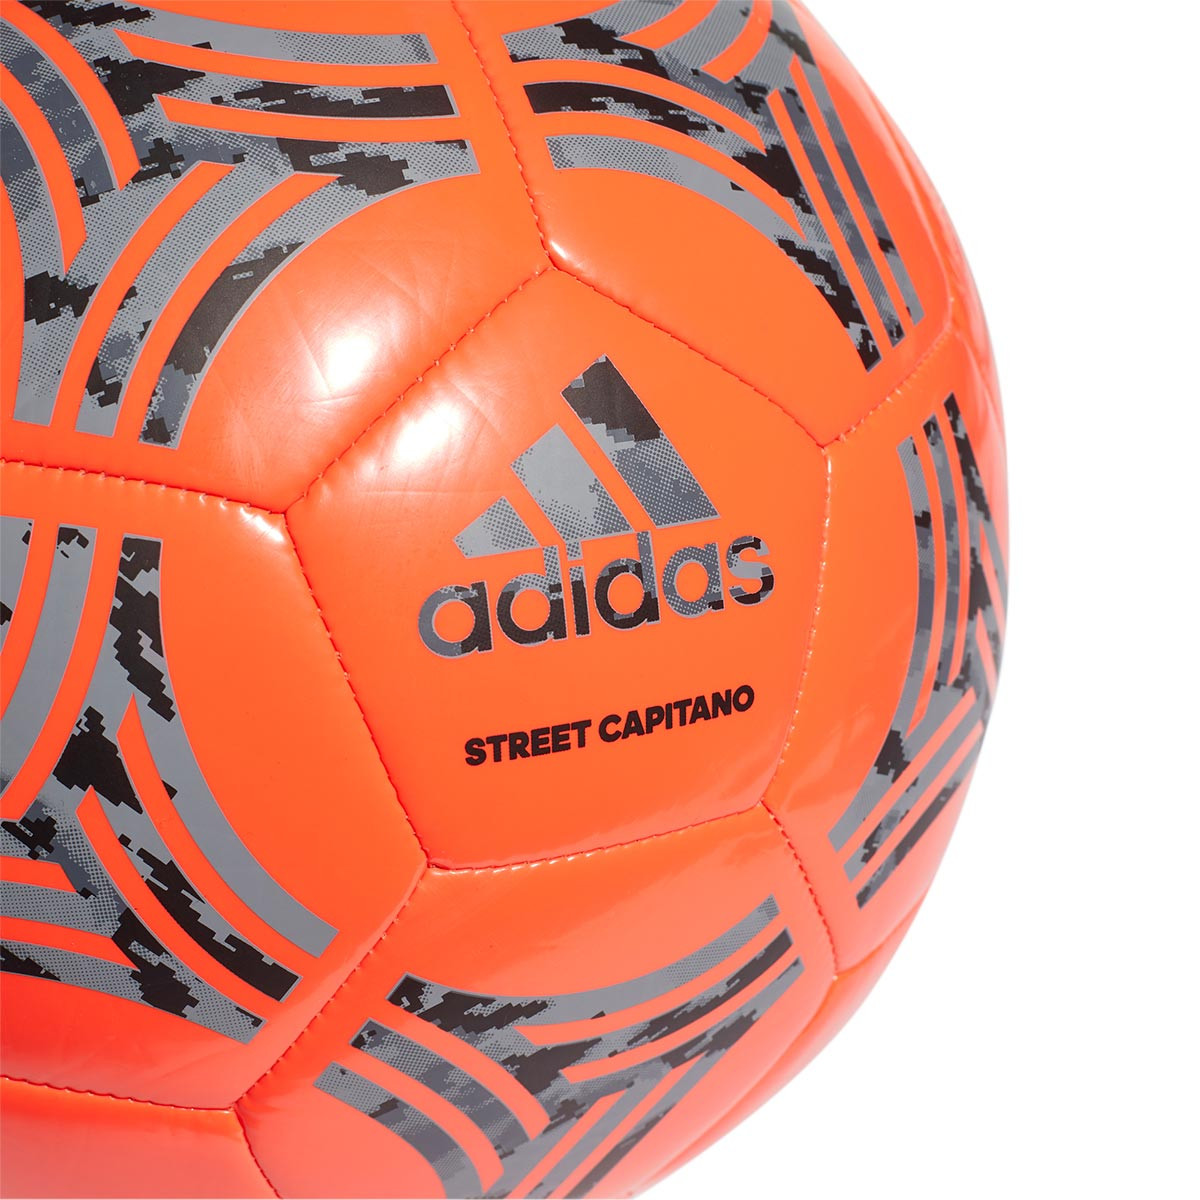 Ball adidas Tango Street Capitano Semi solar red-Carbon-Black-Grey Theree -  Football store Fútbol Emotion